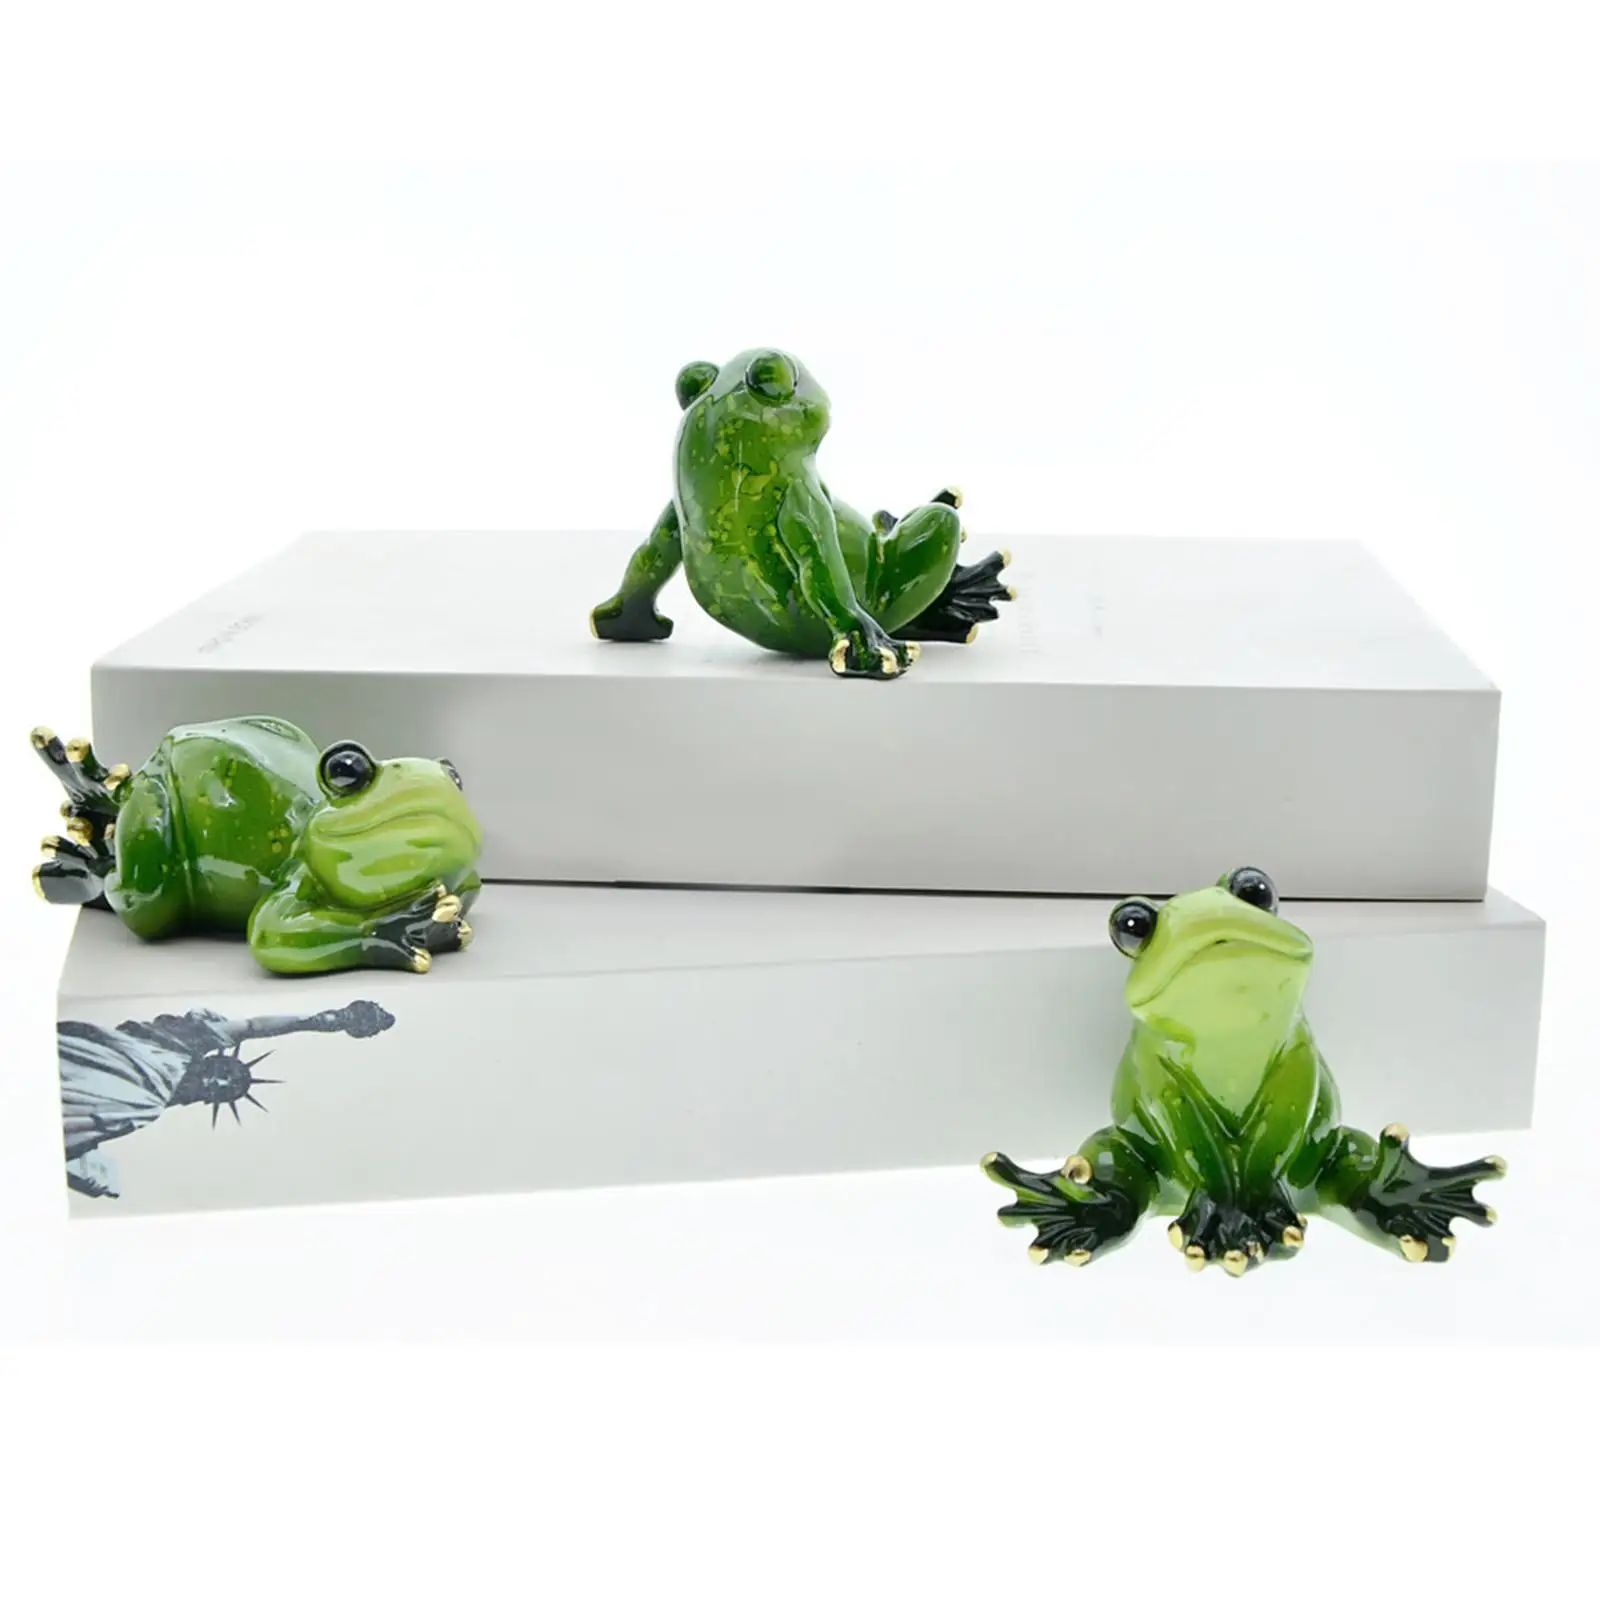 3x Cute Frog Figurines Handicraft Sculpture Animal Resin Miniature Ornament for Hotel Desktop Garden Office Decoration